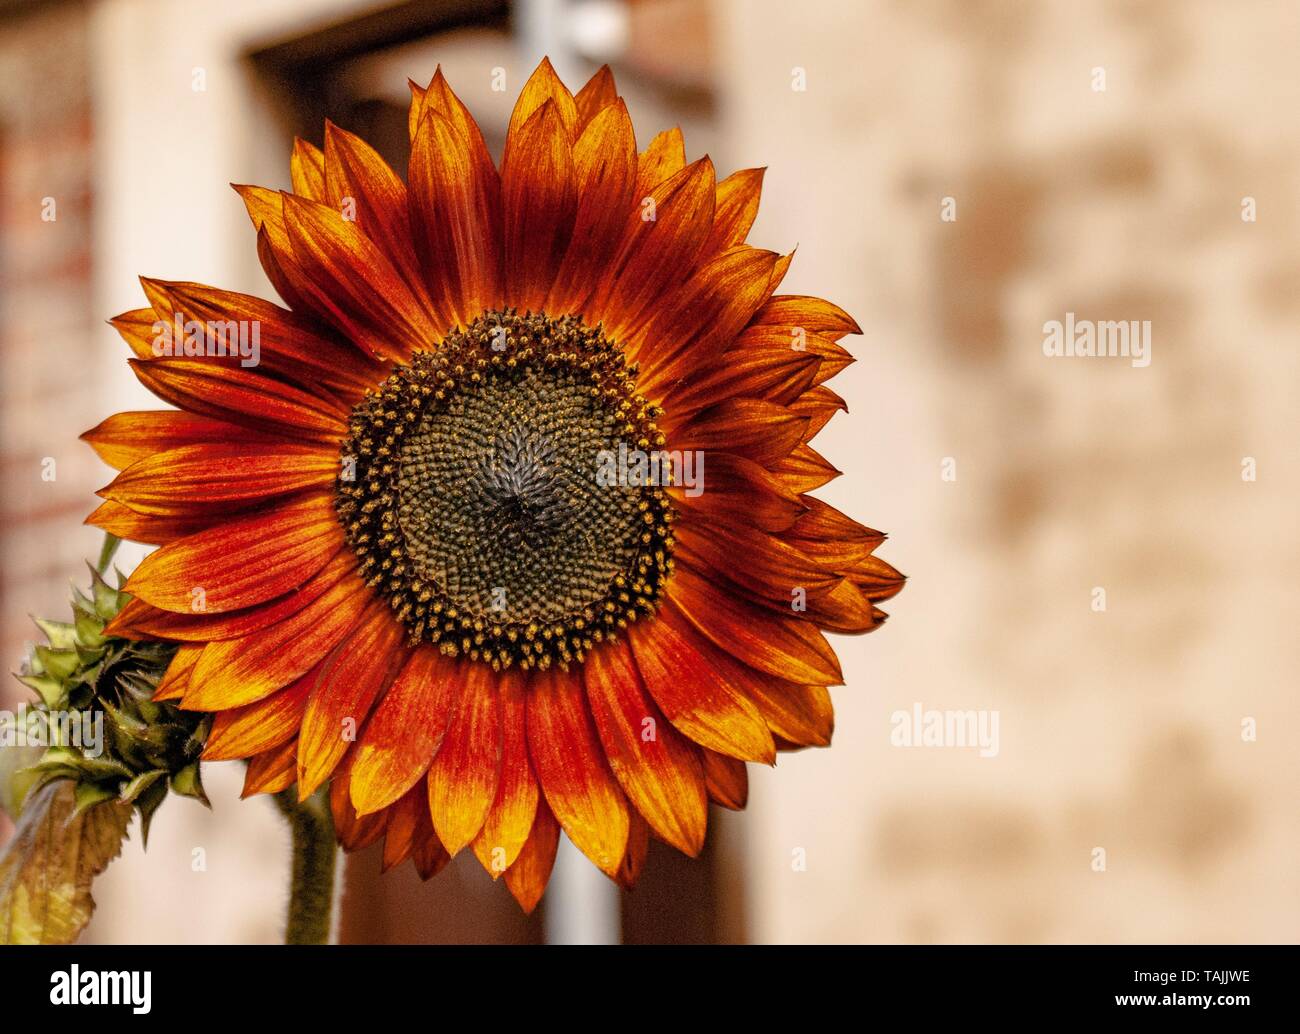 Teddybear sunflower Stock Photo